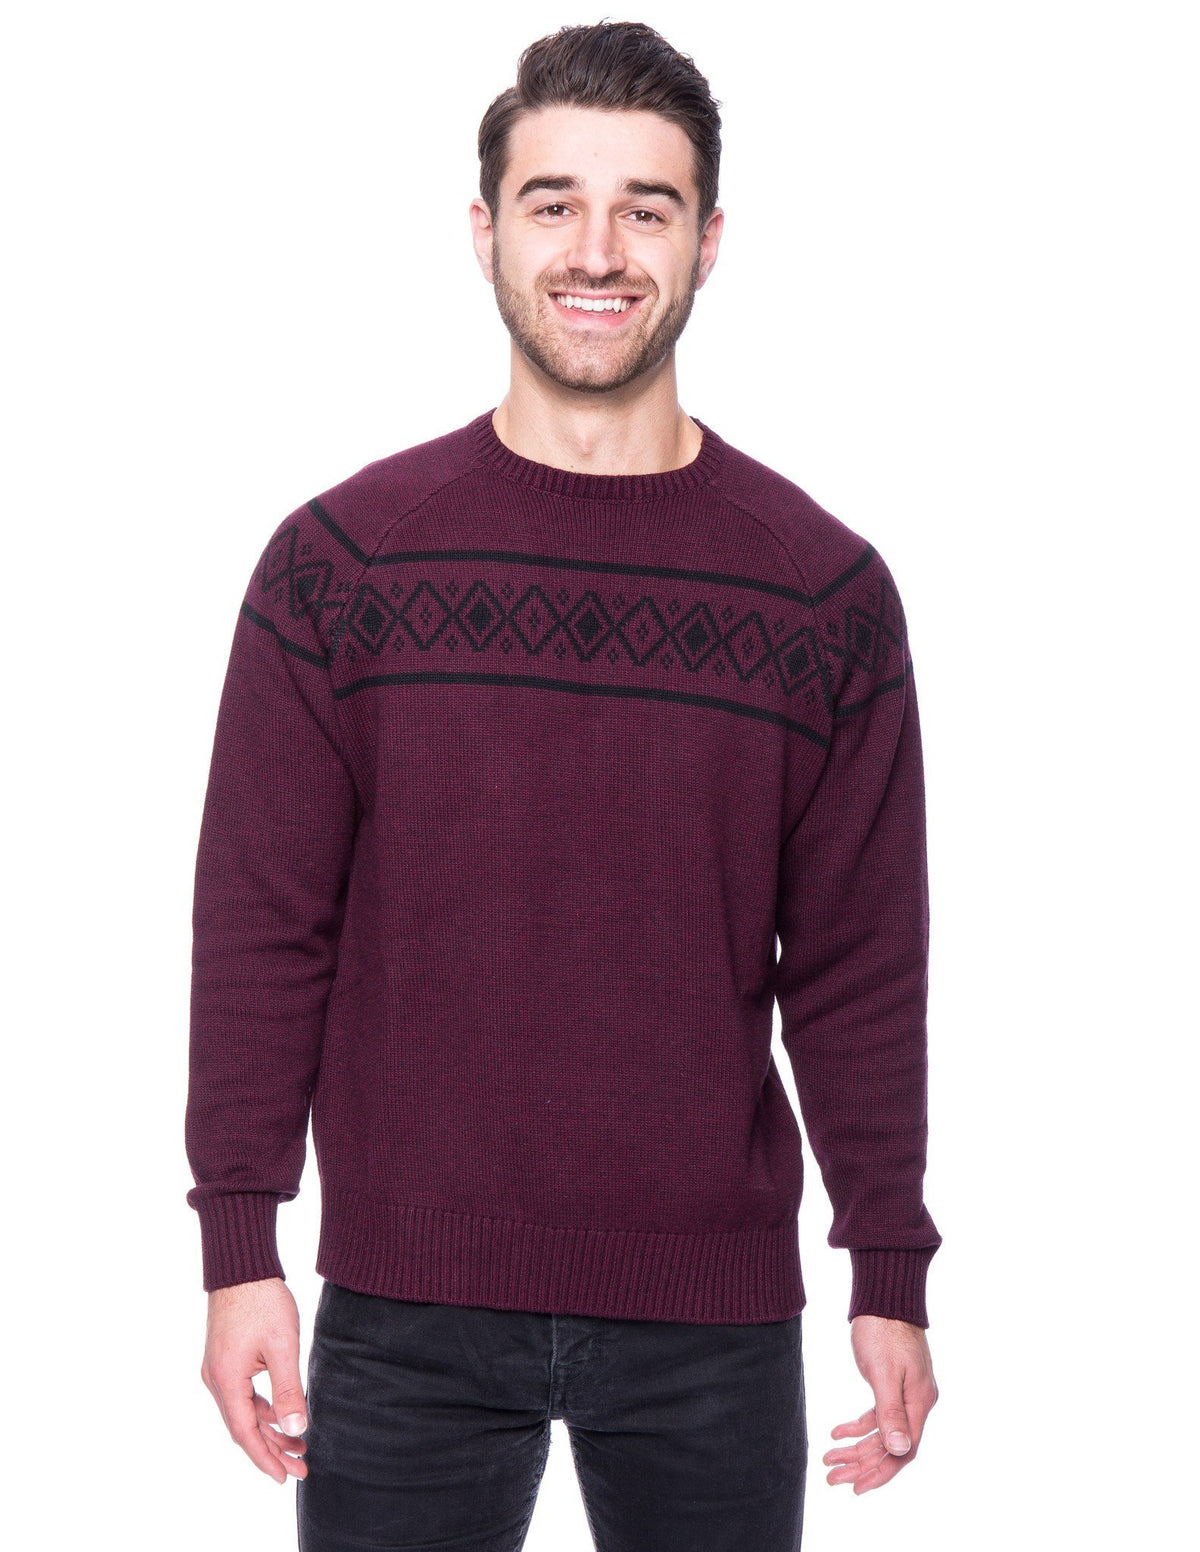 Men's 100% Cotton Crew Neck Sweater with Fair Isle Stripe - Marl Burgundy/Black